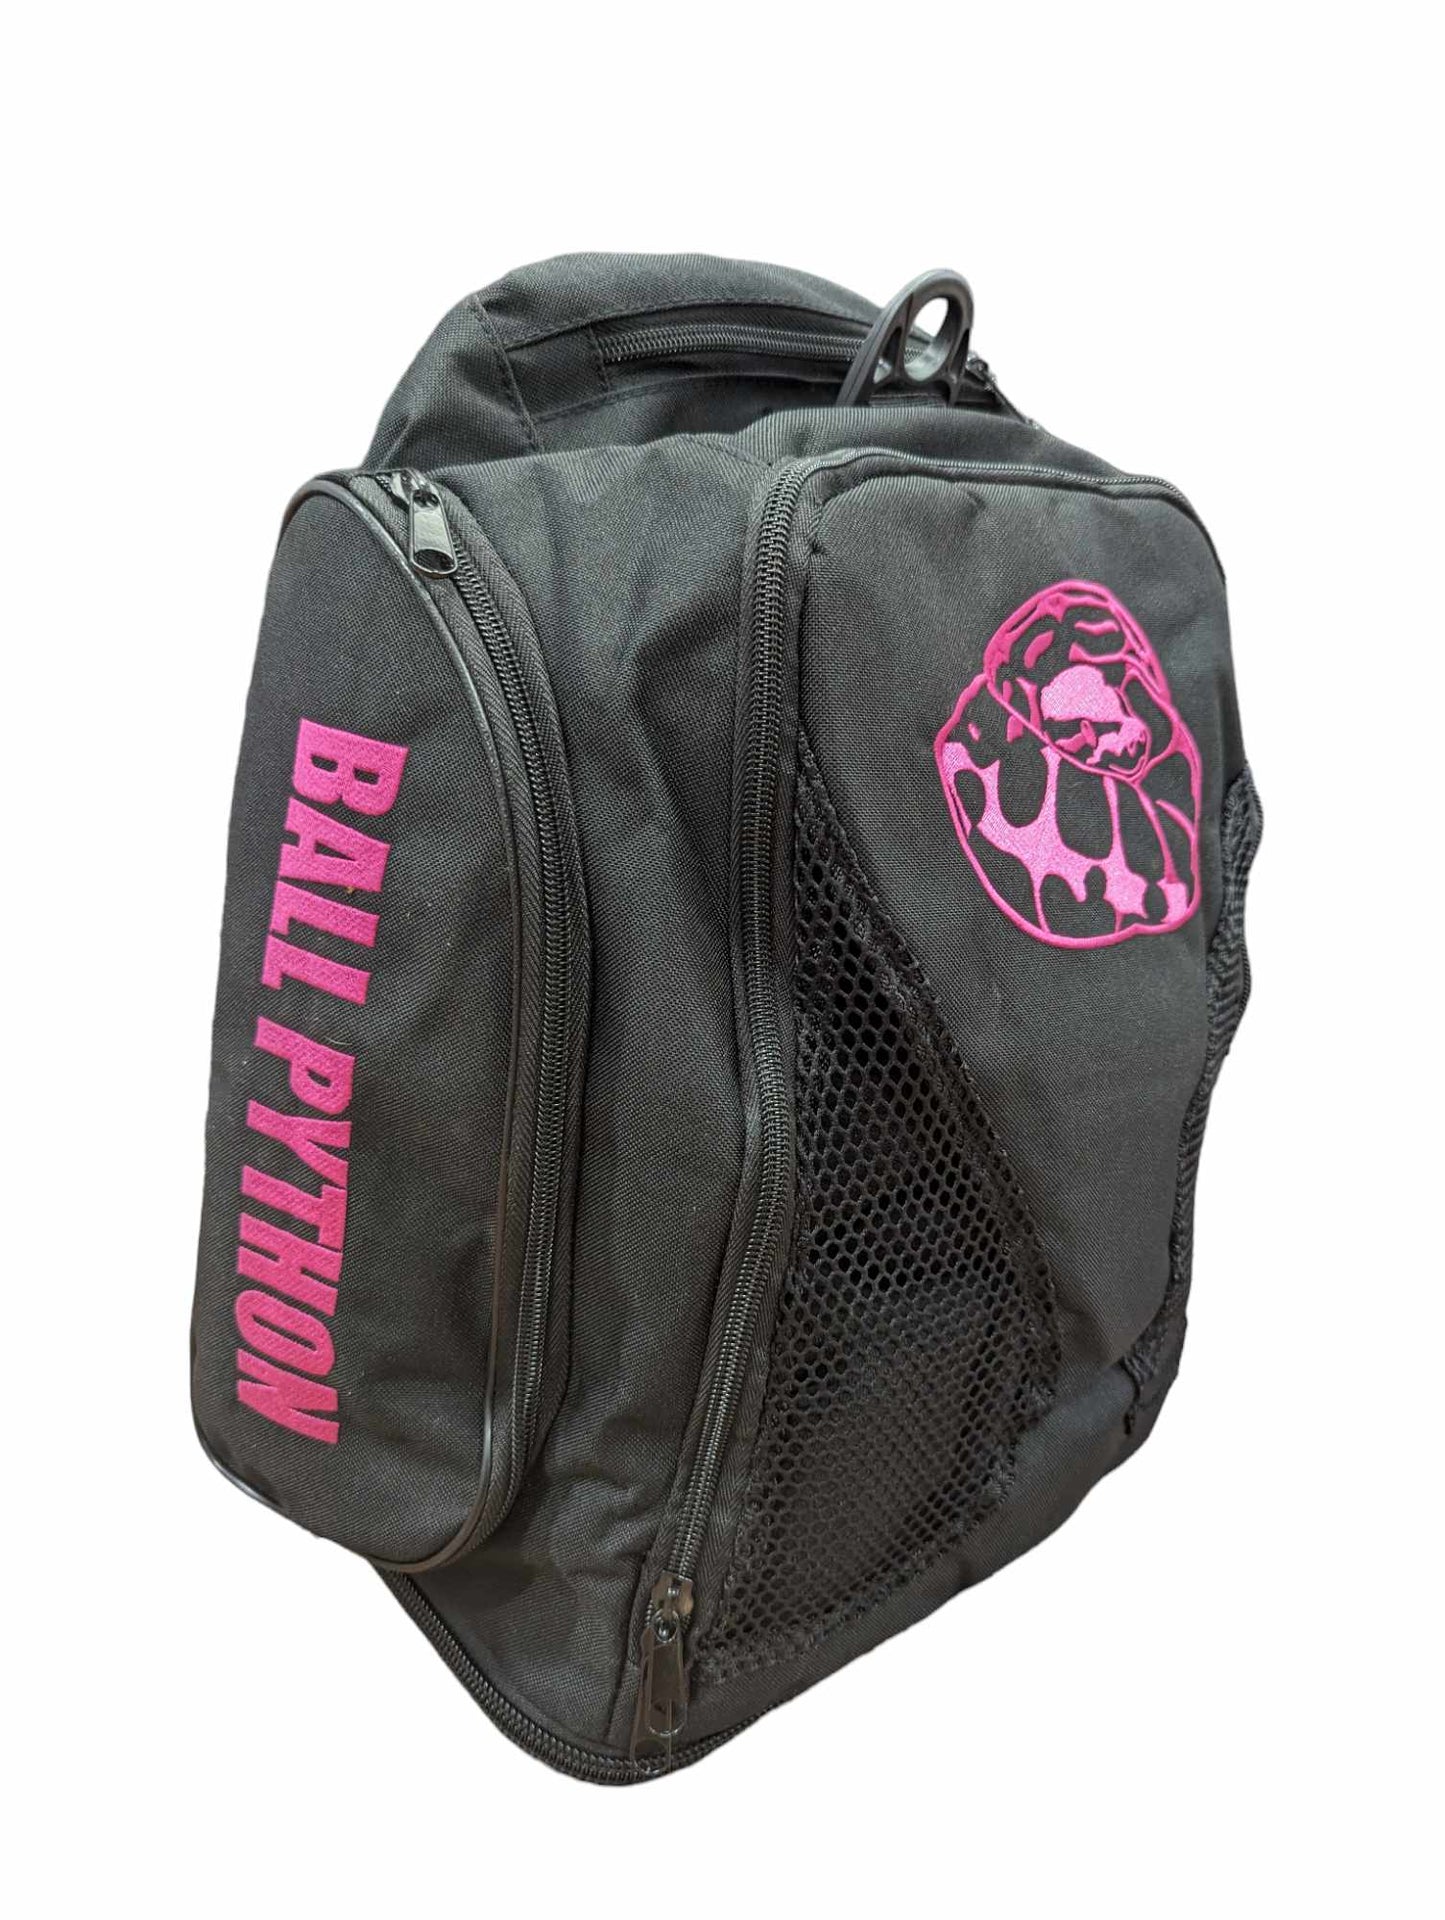 Ball Python Embroidered Backpack